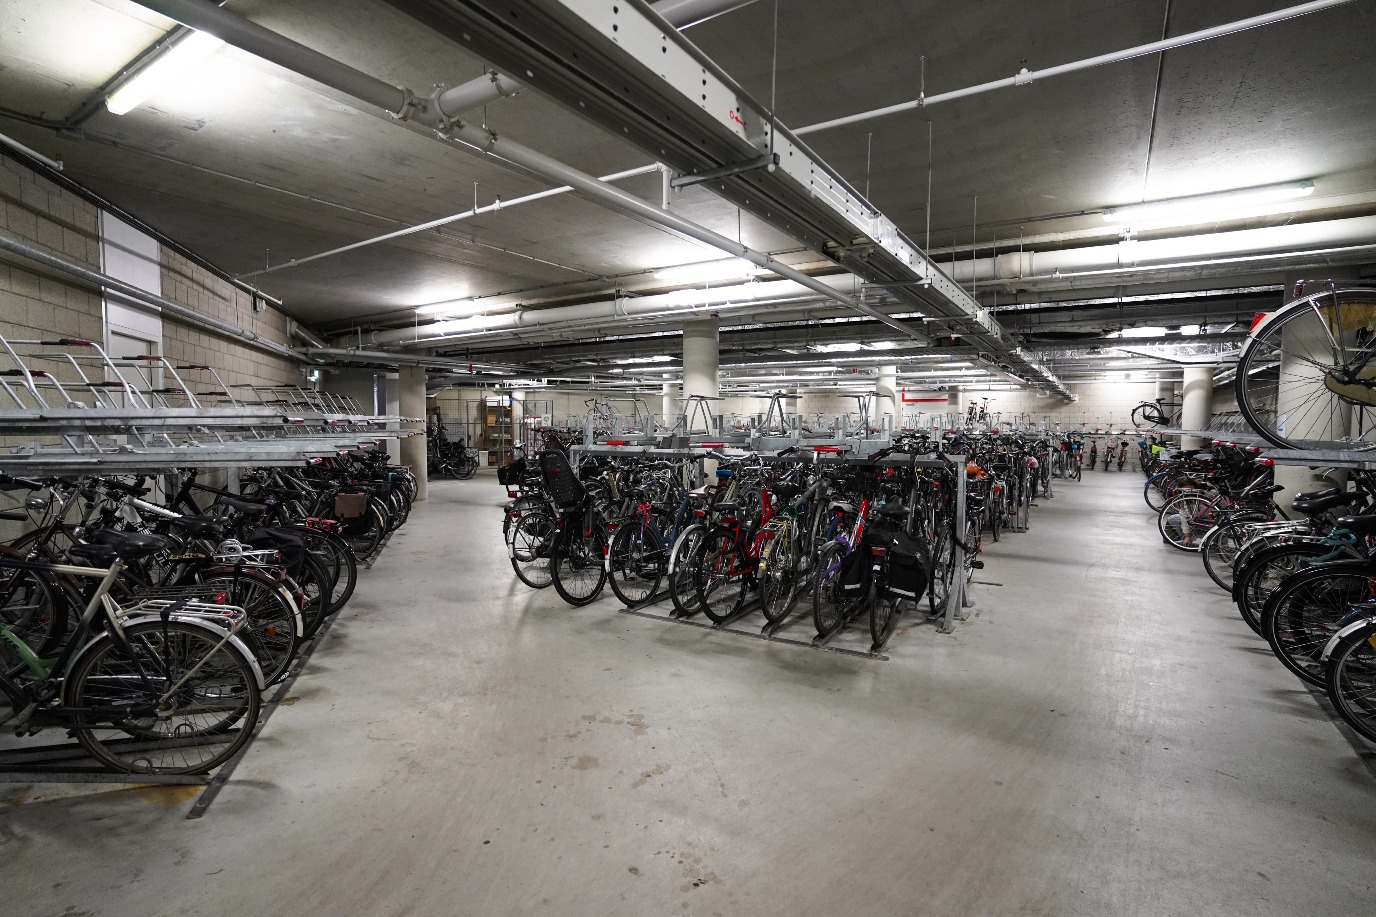 Bicycle basement under building